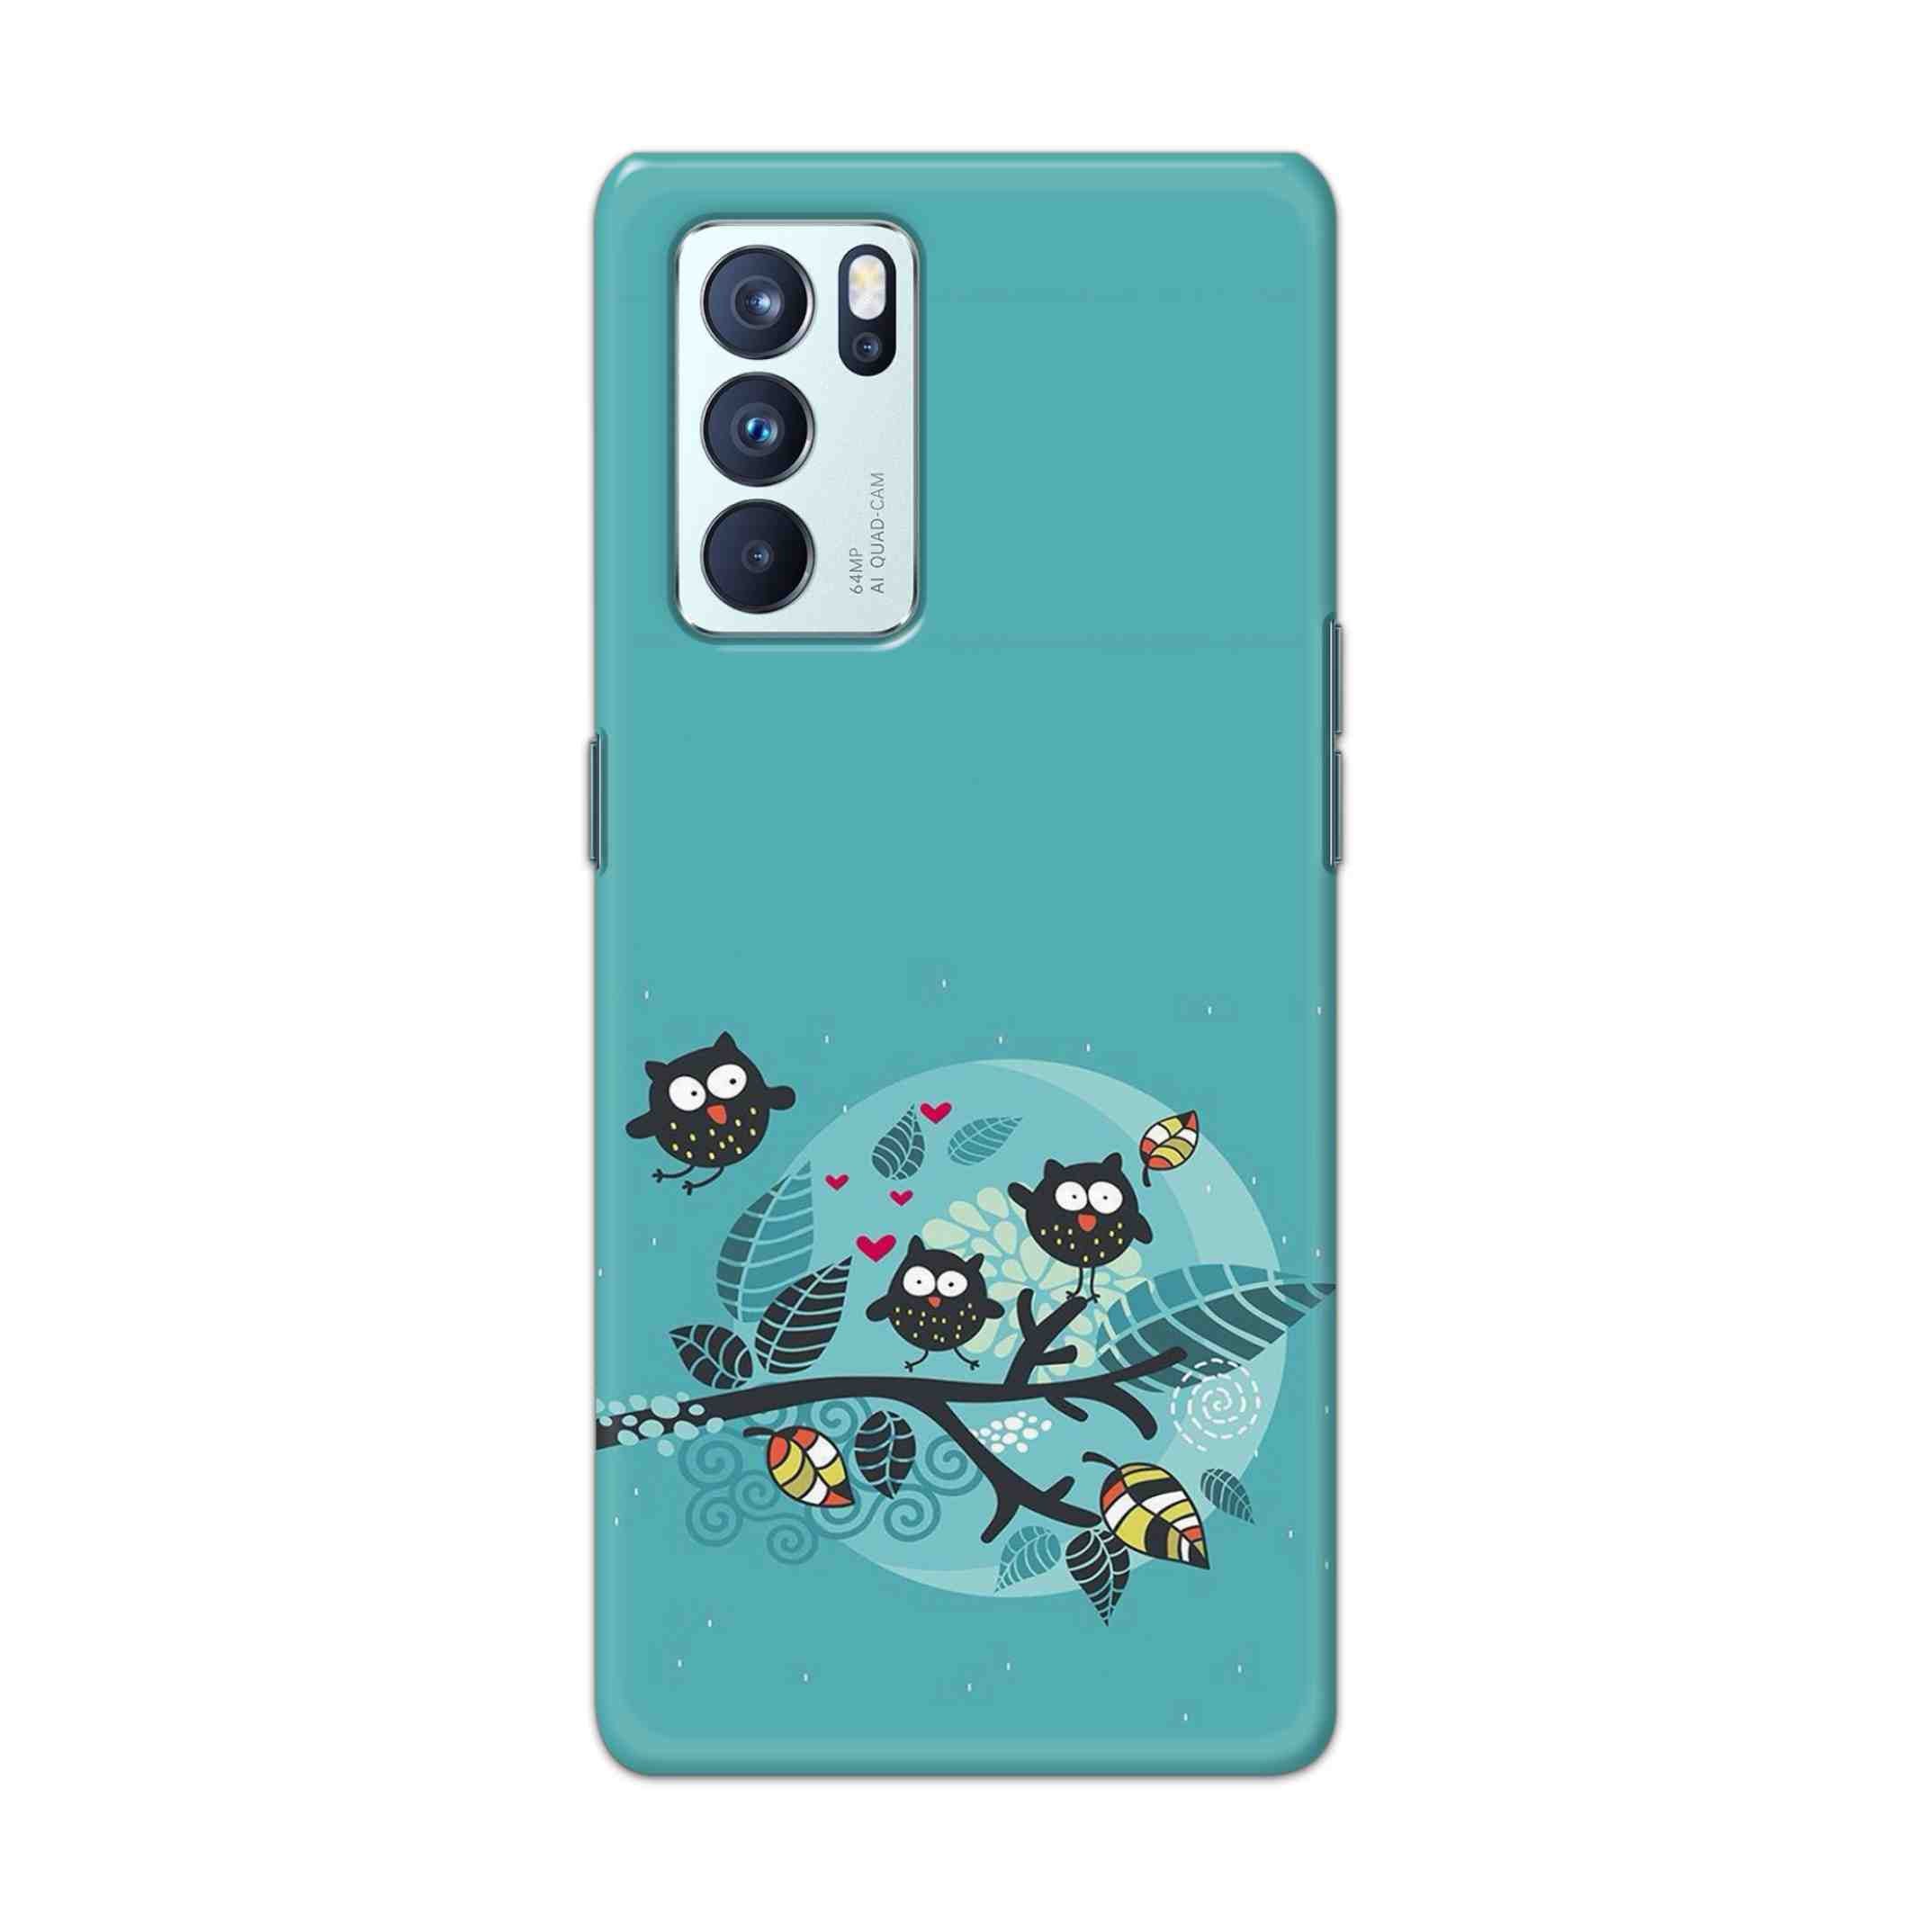 Buy Owl Hard Back Mobile Phone Case Cover For OPPO Reno 6 Pro 5G Online